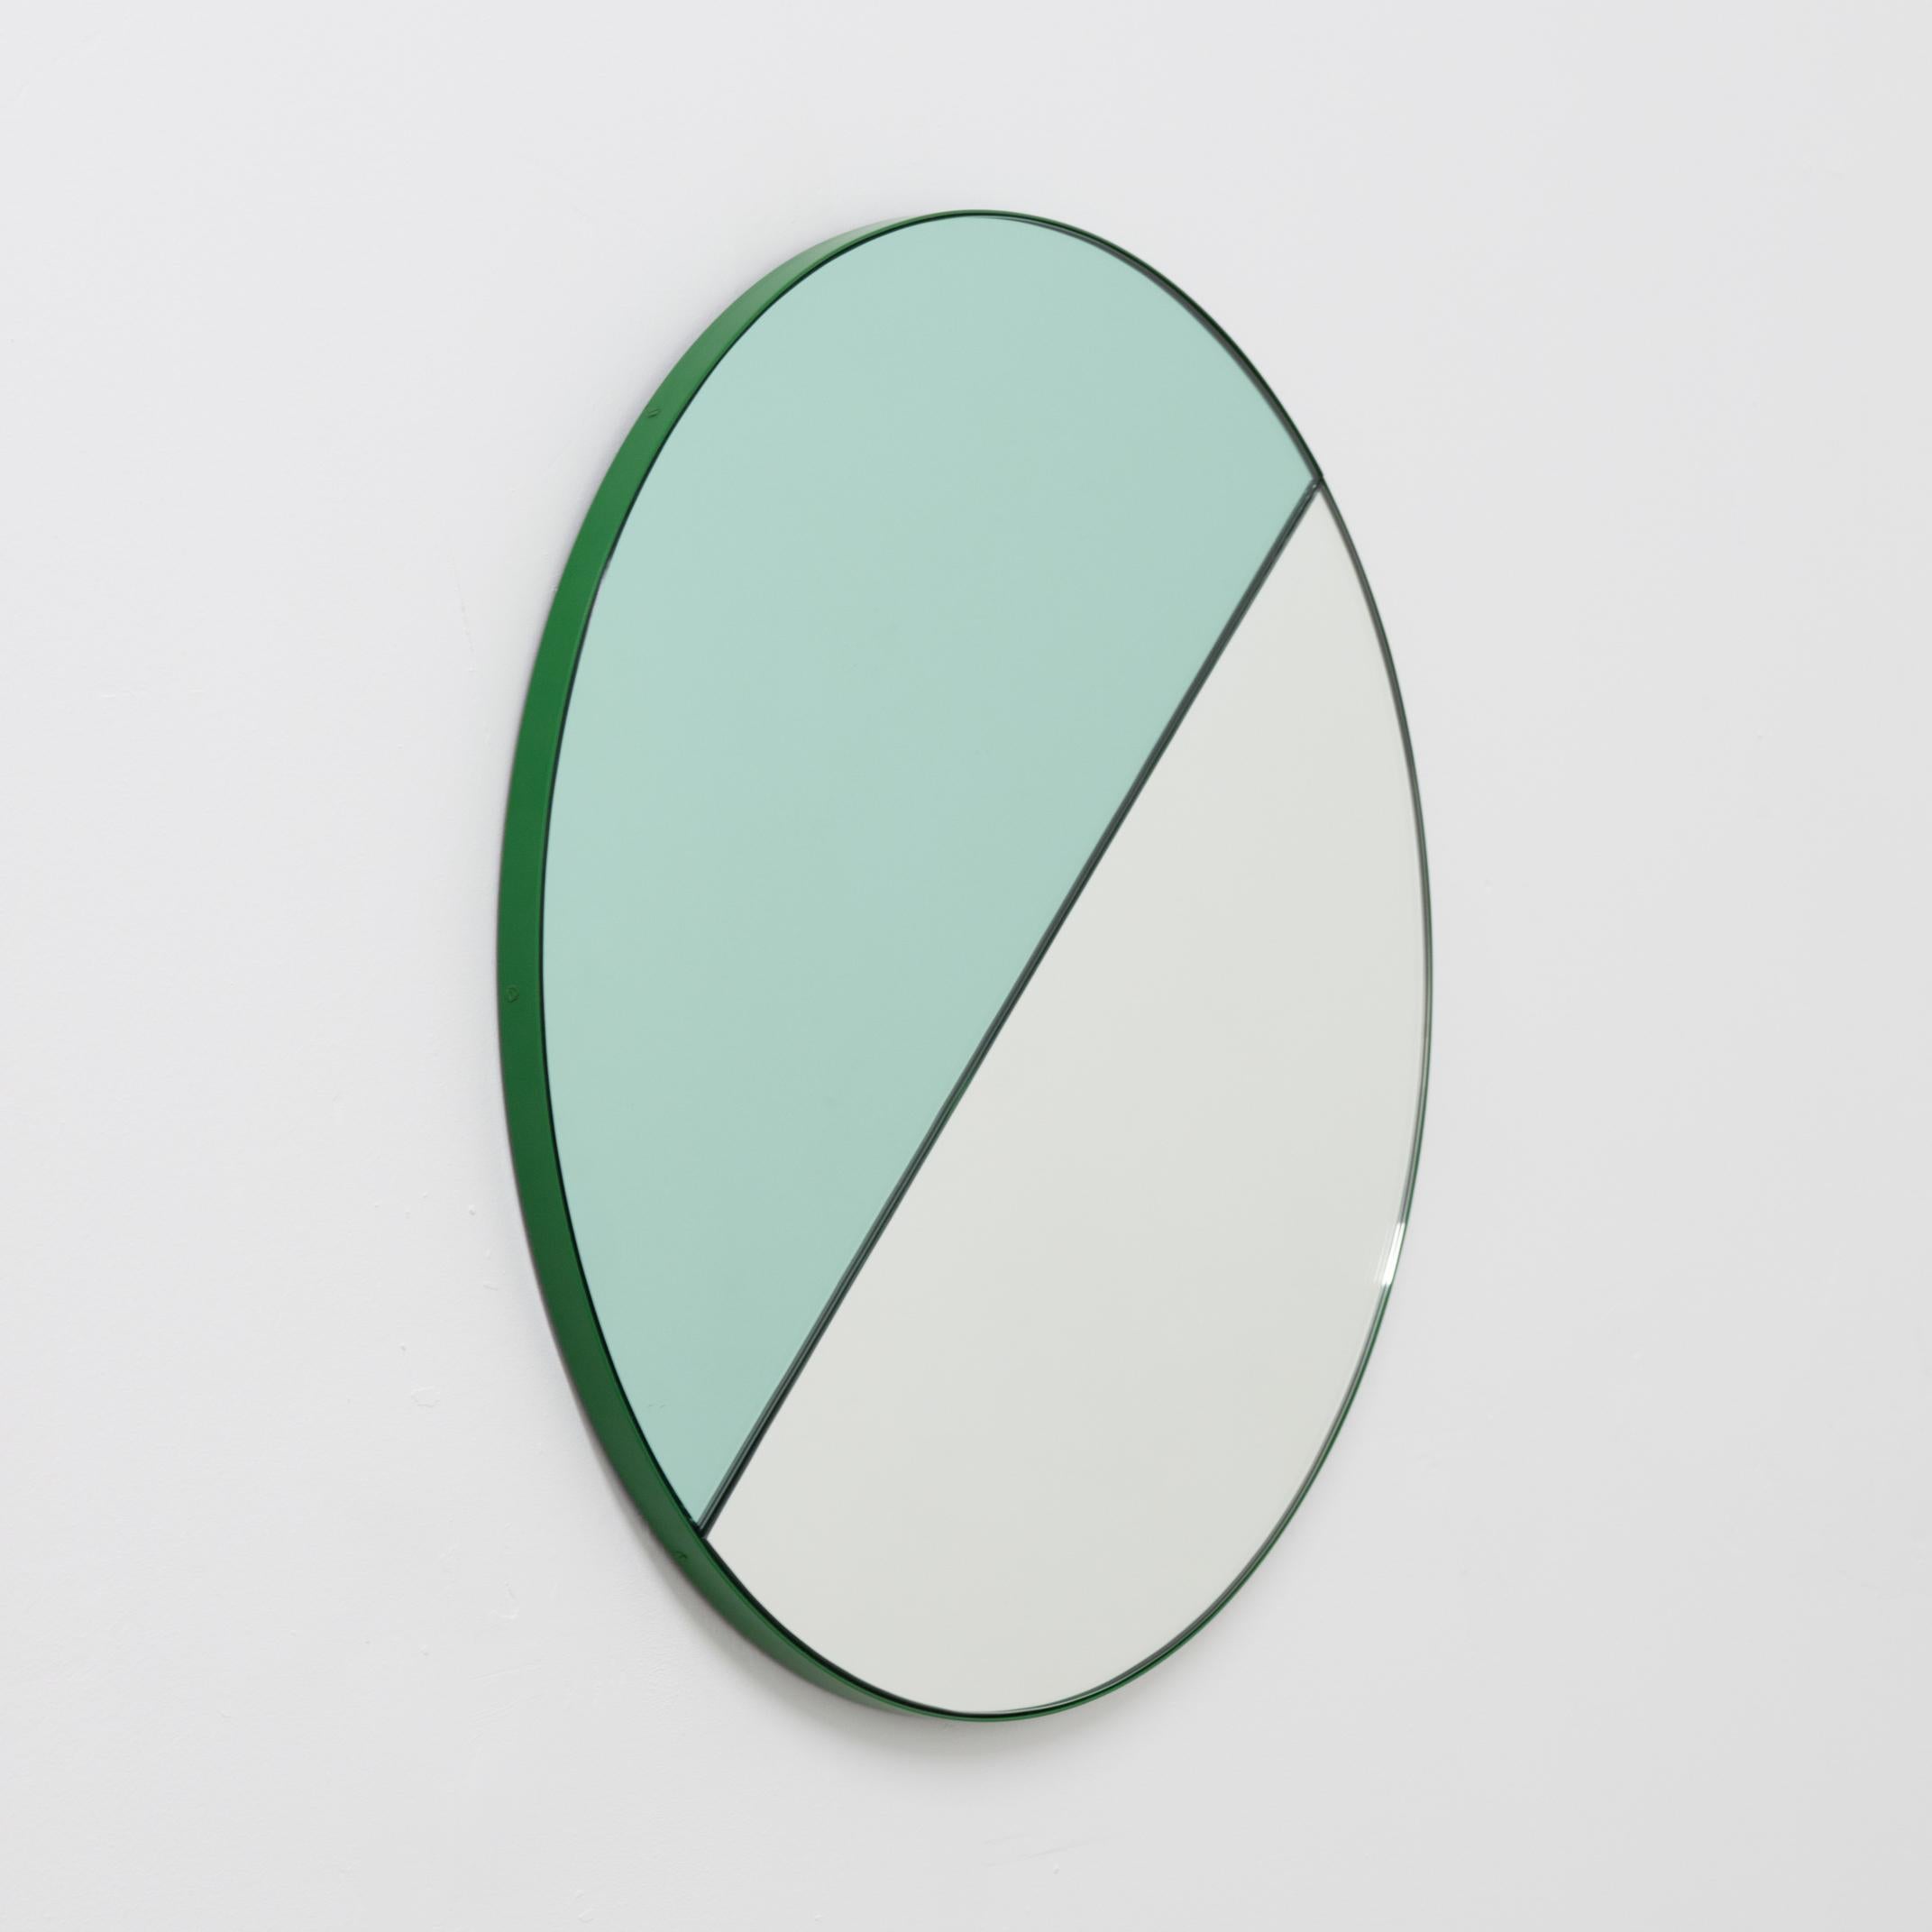 British Orbis Dualis Mixed 'Green + Silver' Round Mirror with Green Frame, Medium